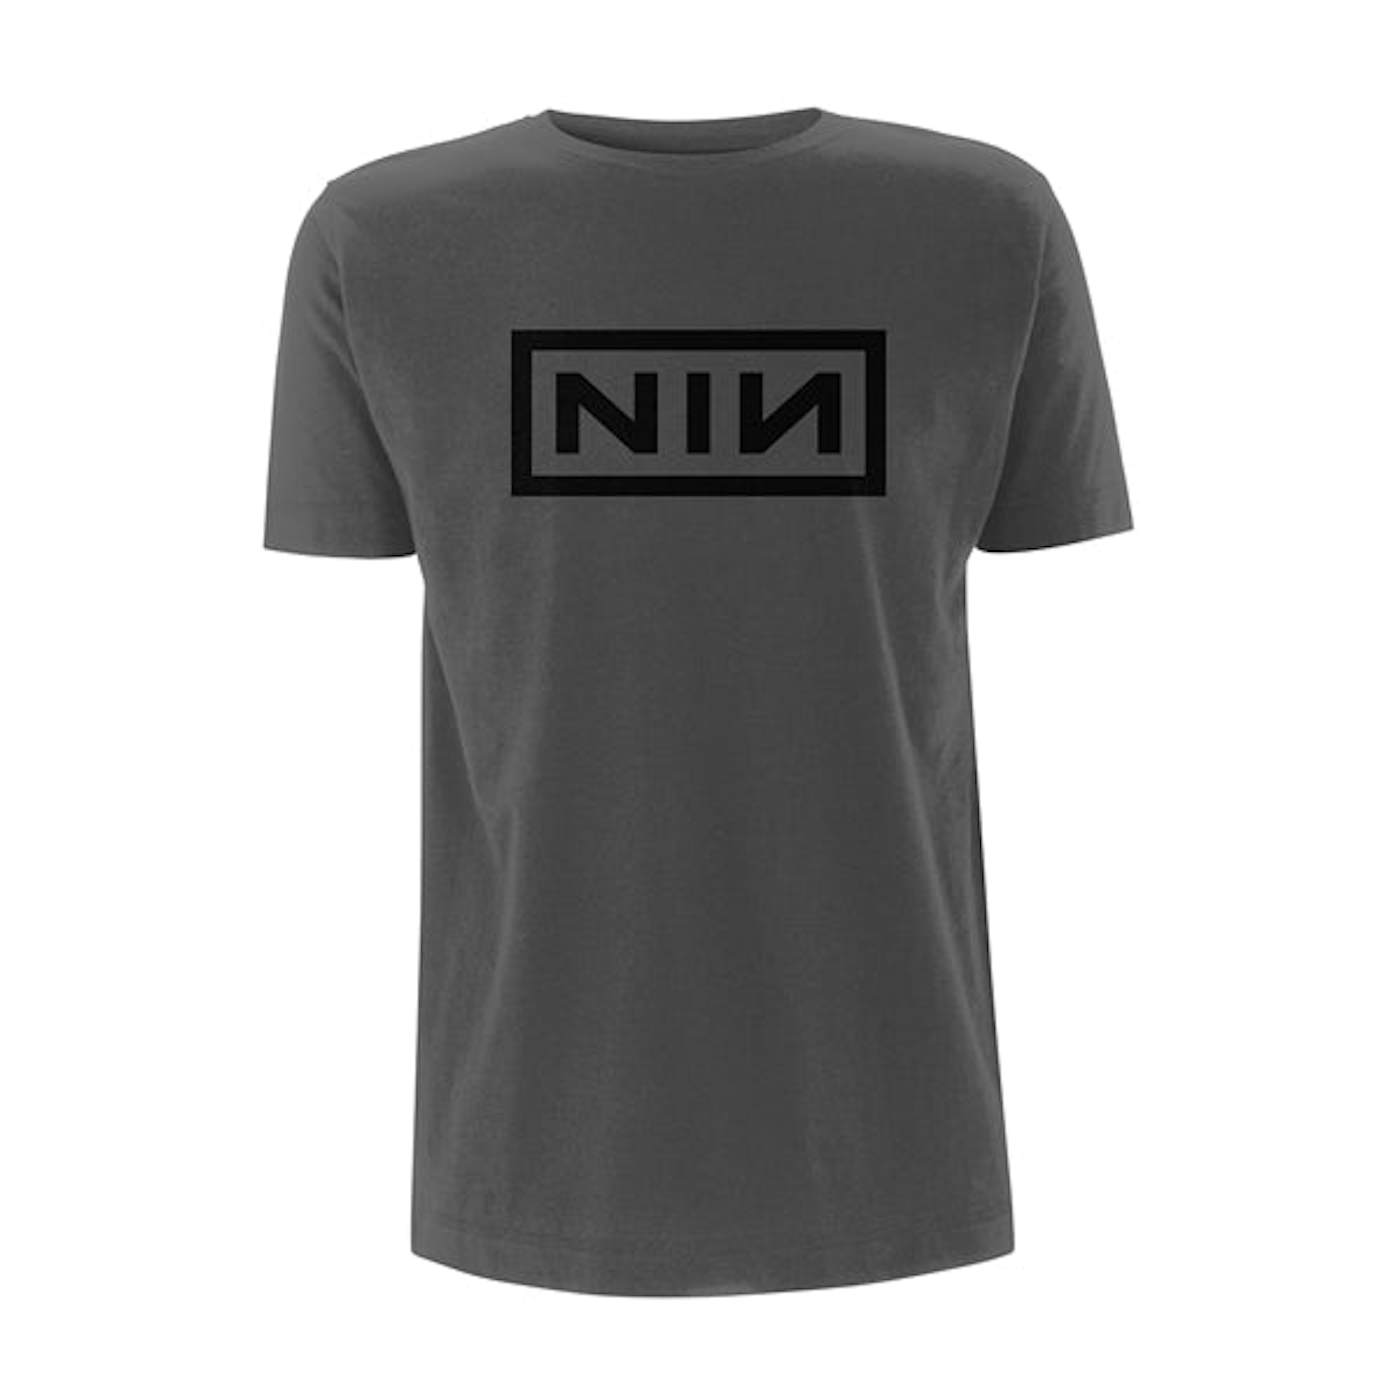 Nine Inch Nails T Shirt - Classic Black Logo